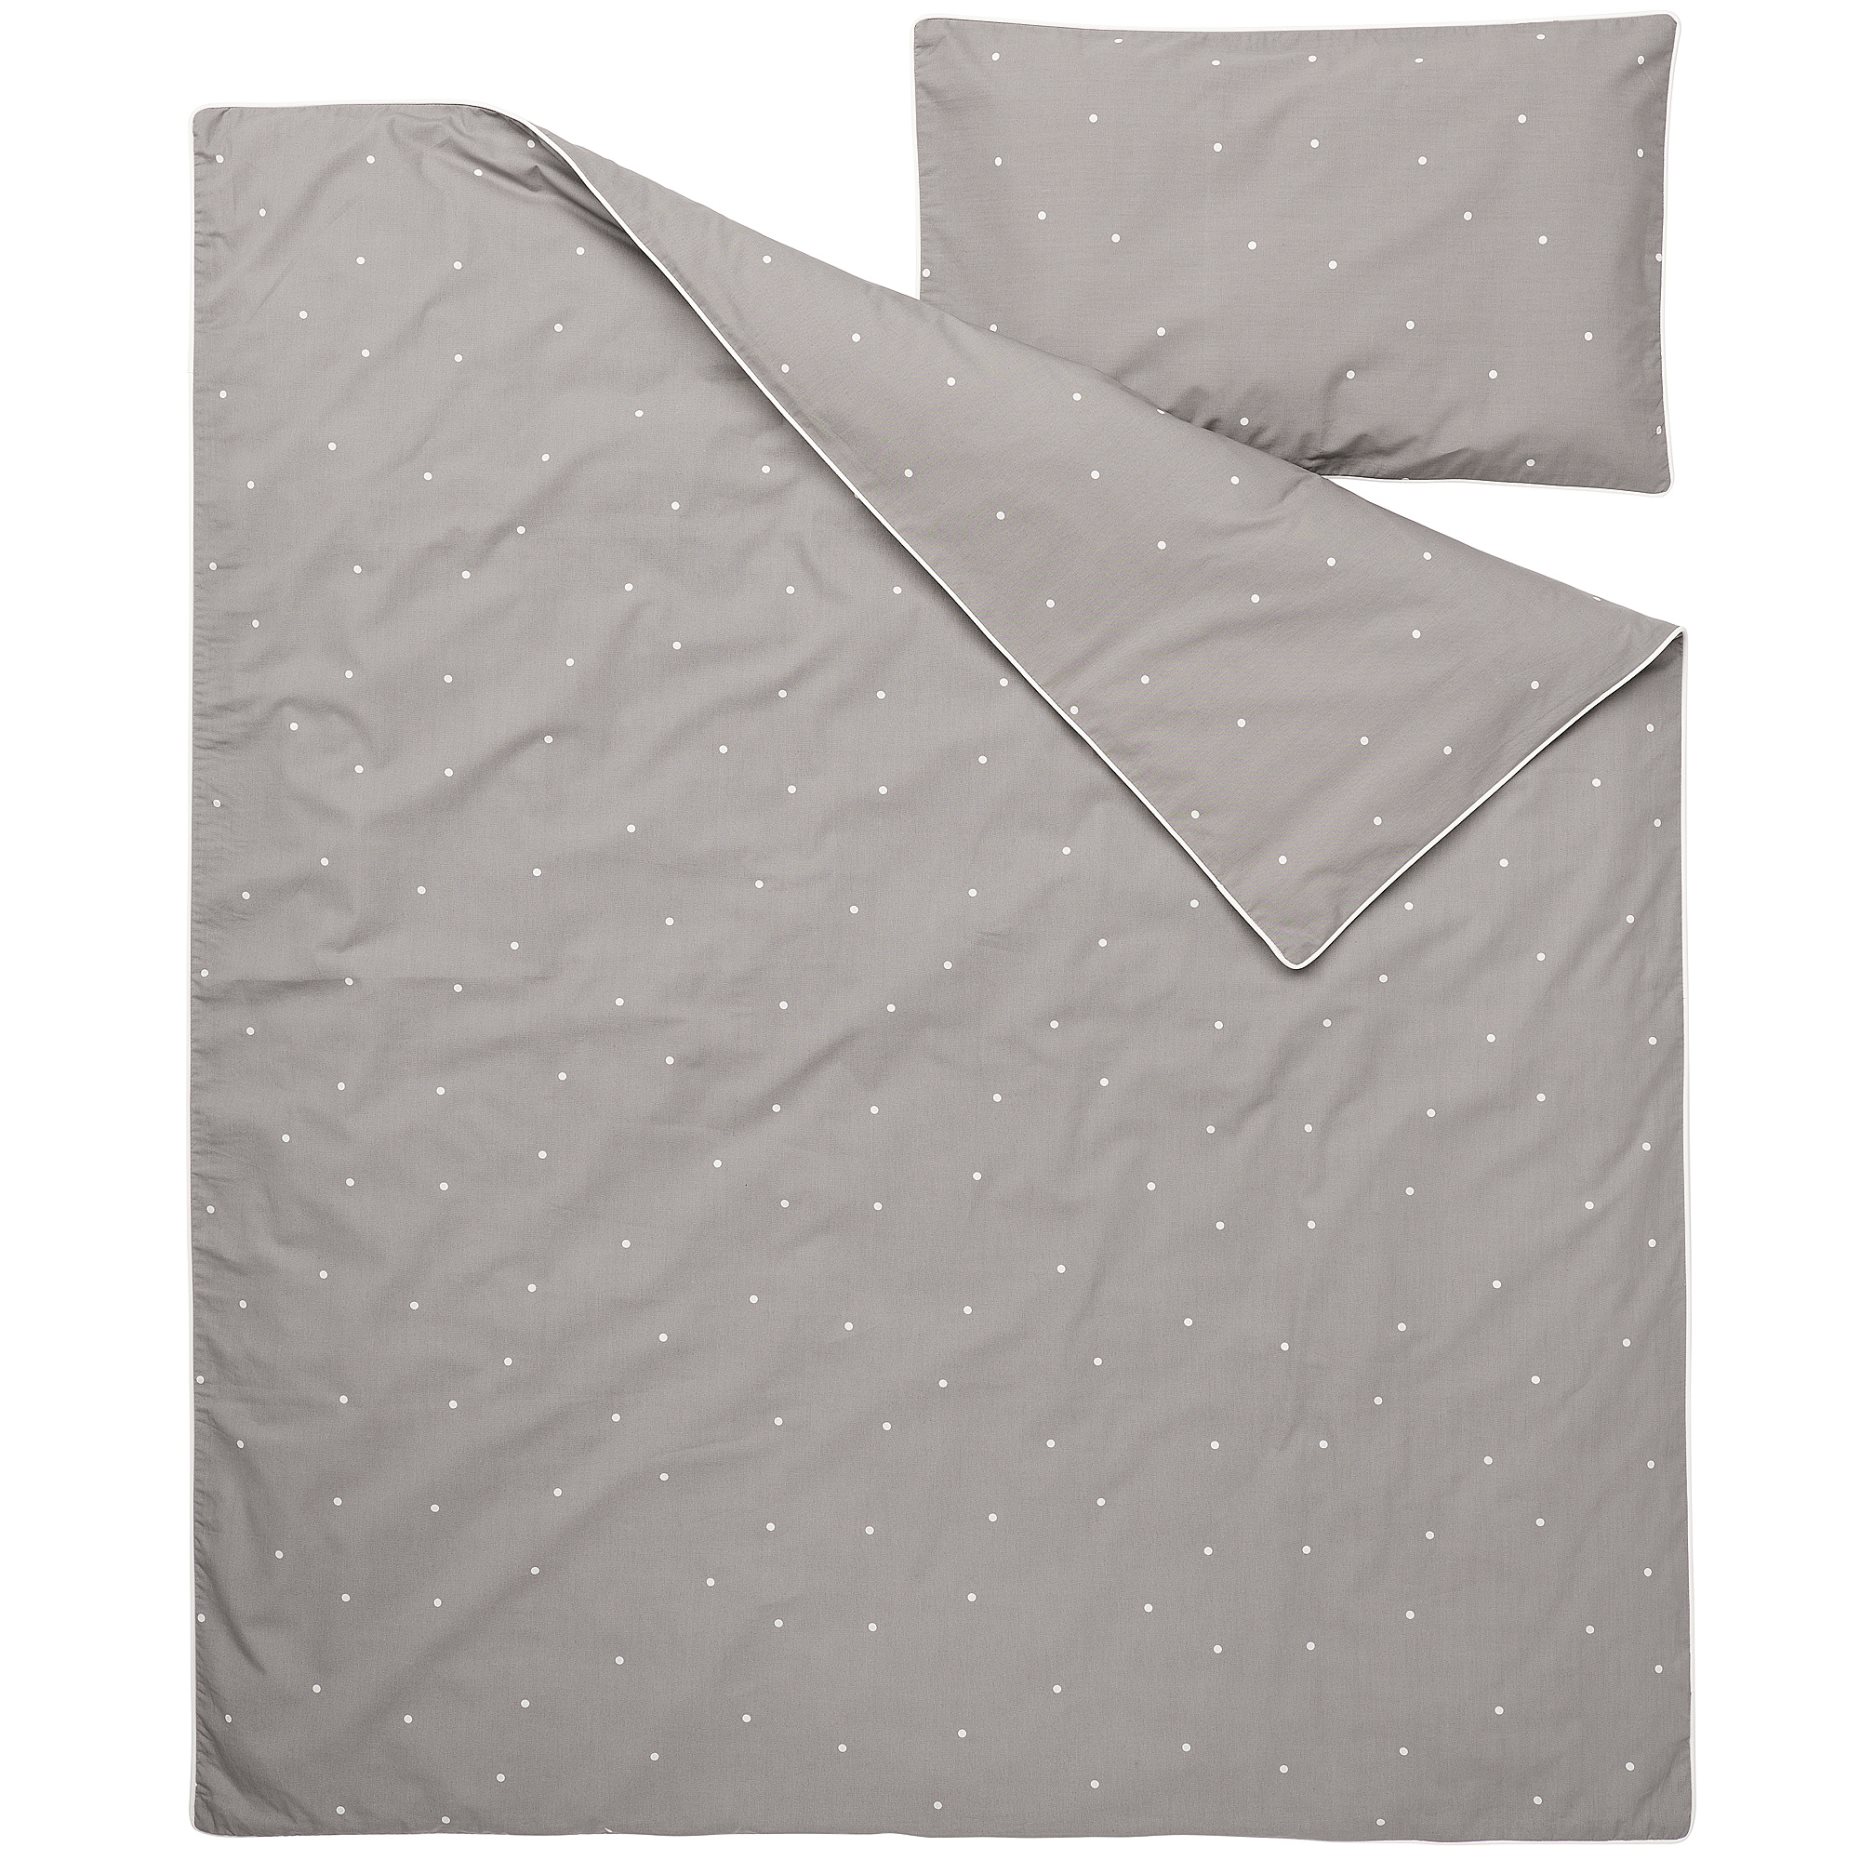 LENAST, quilt cover/pillowcase for cot, 110x125/35x55 cm, 604.889.36